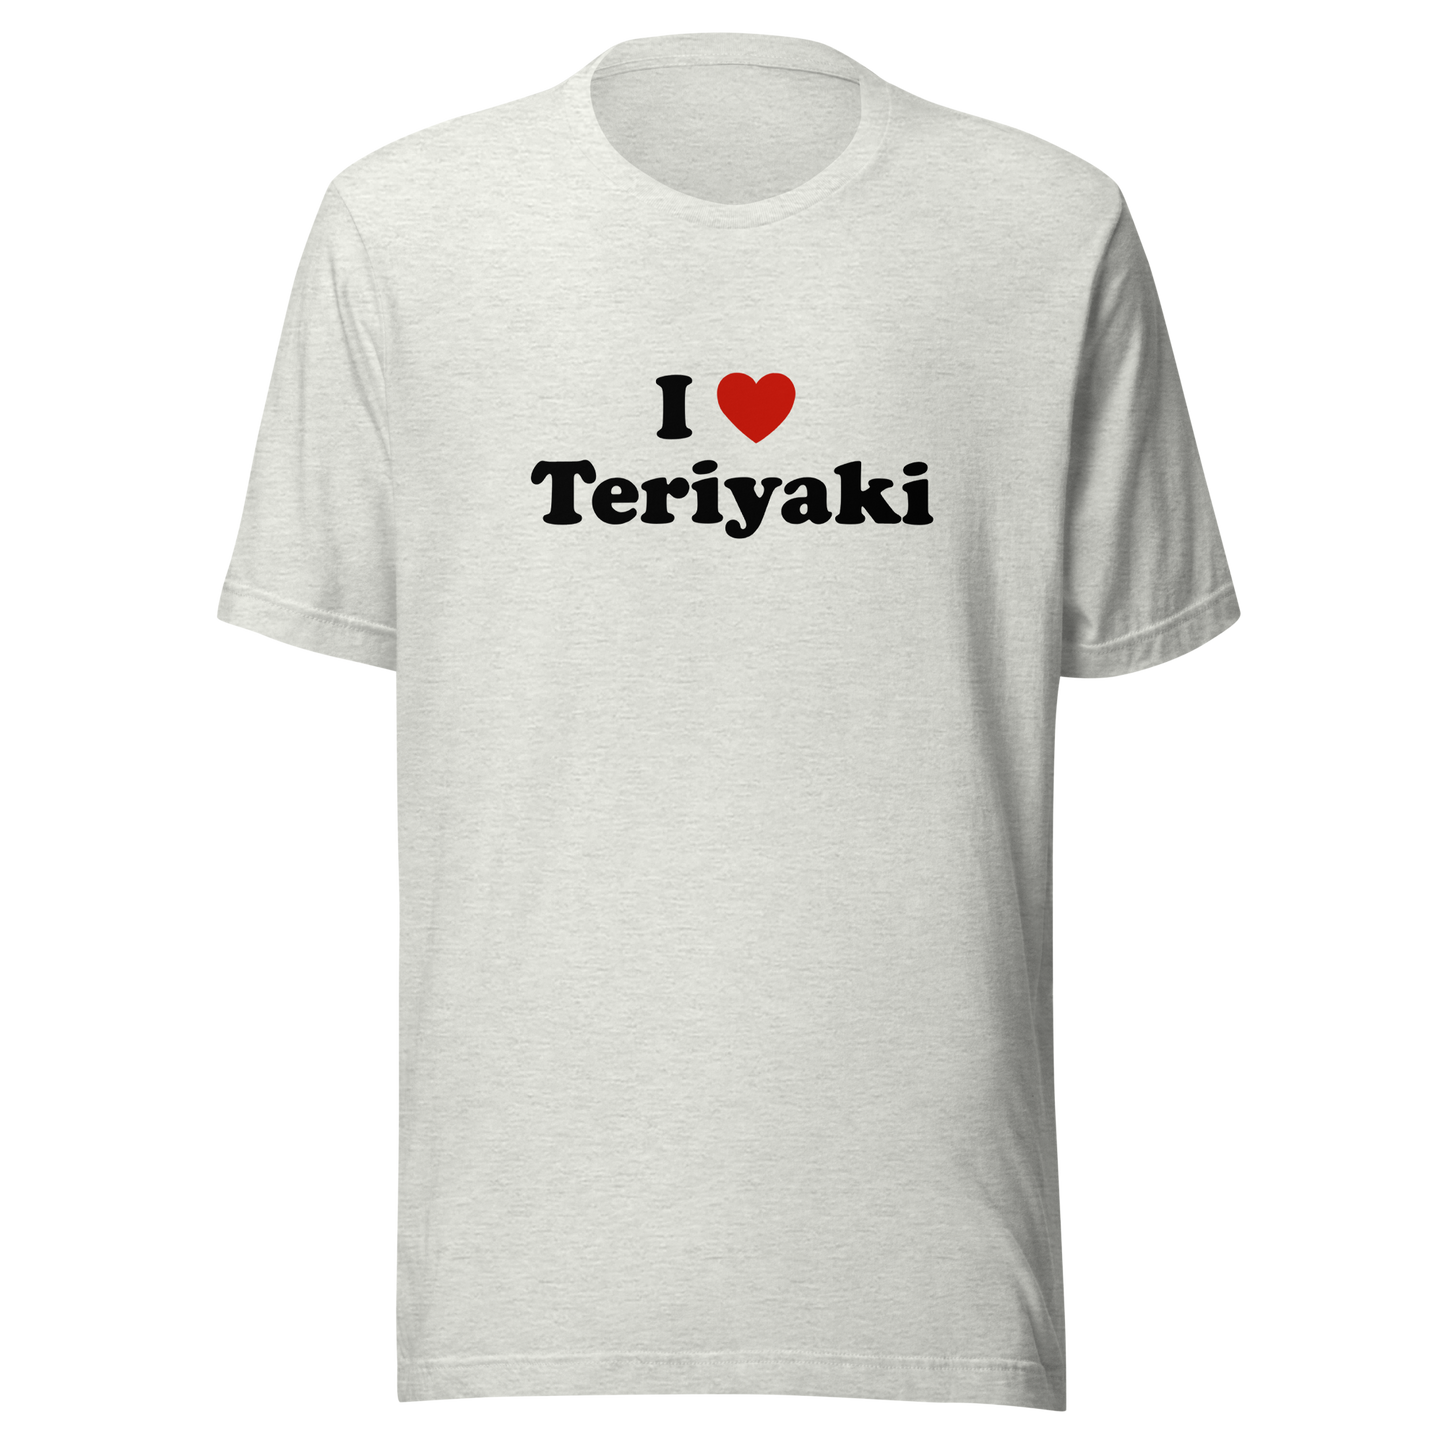 I heart Teriyaki! t-shirt